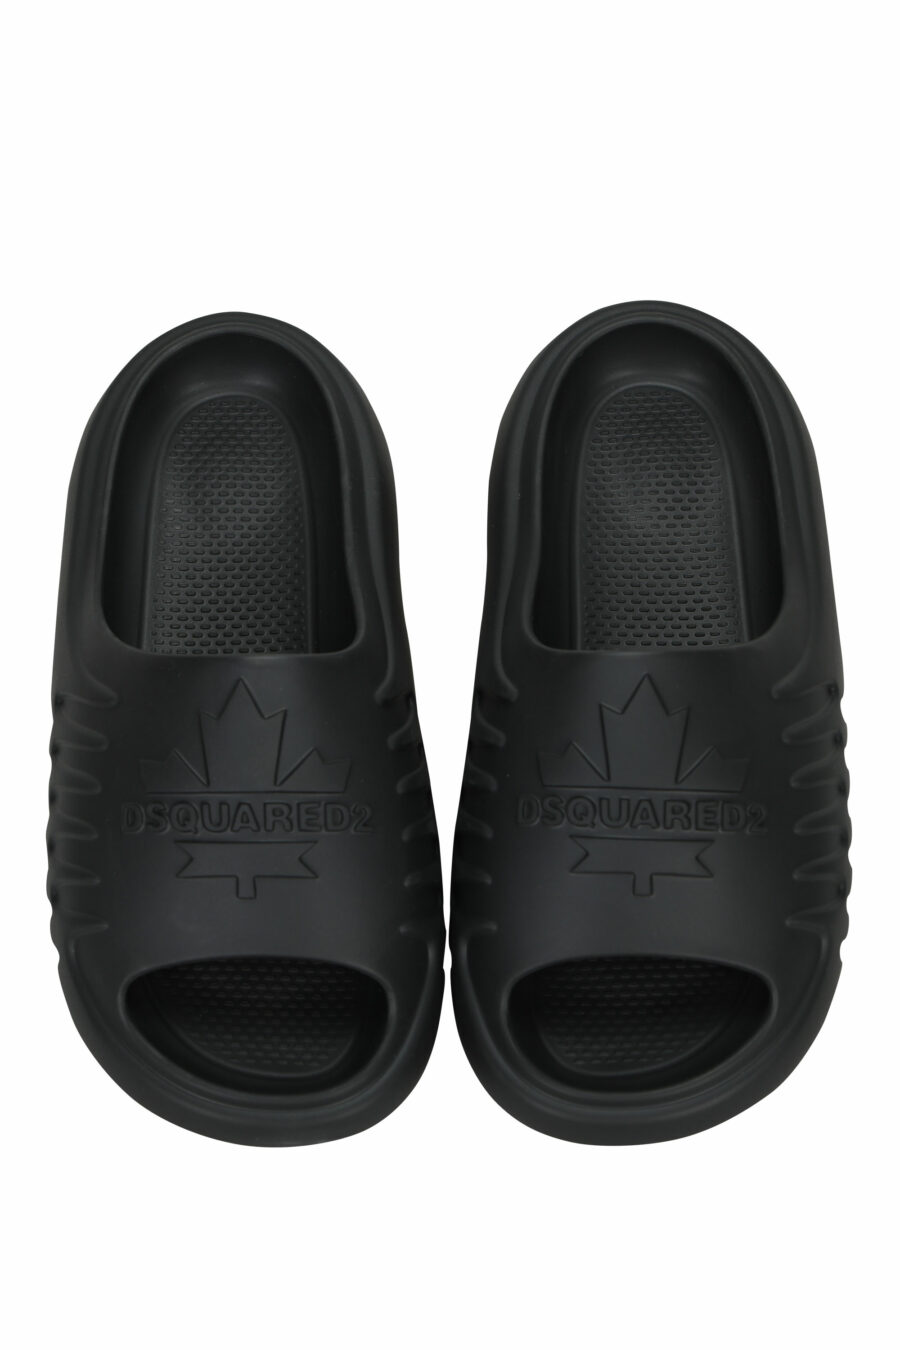 Black rubber flip flops with monochrome logo - 8055777295403 4